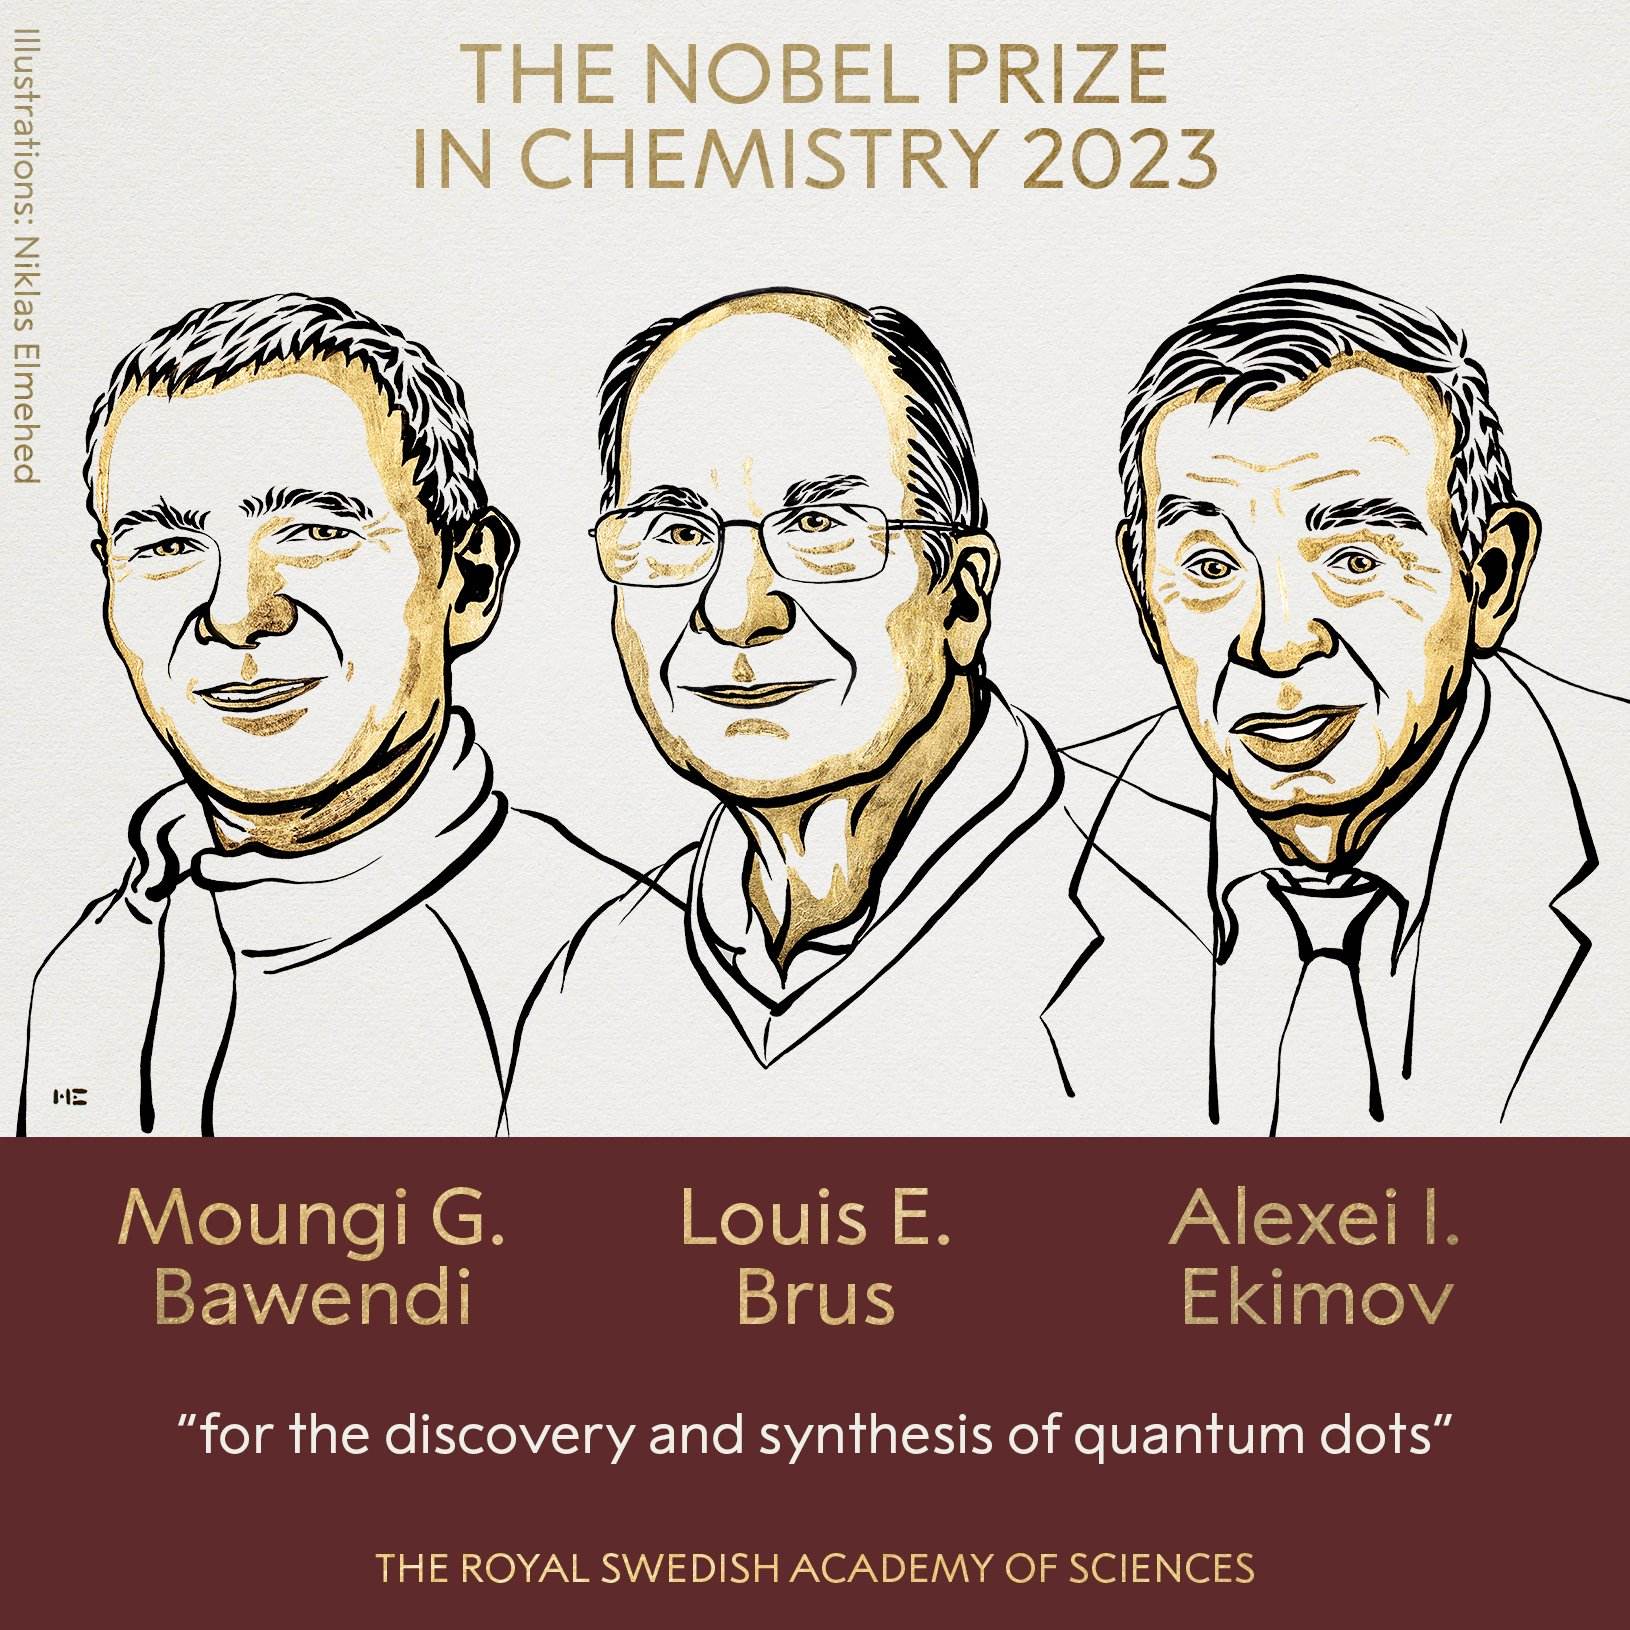 Moungi G. Bawendi, Louis E. Brus y Alexei I. Ekimov reciben el Nobel de Química 2023